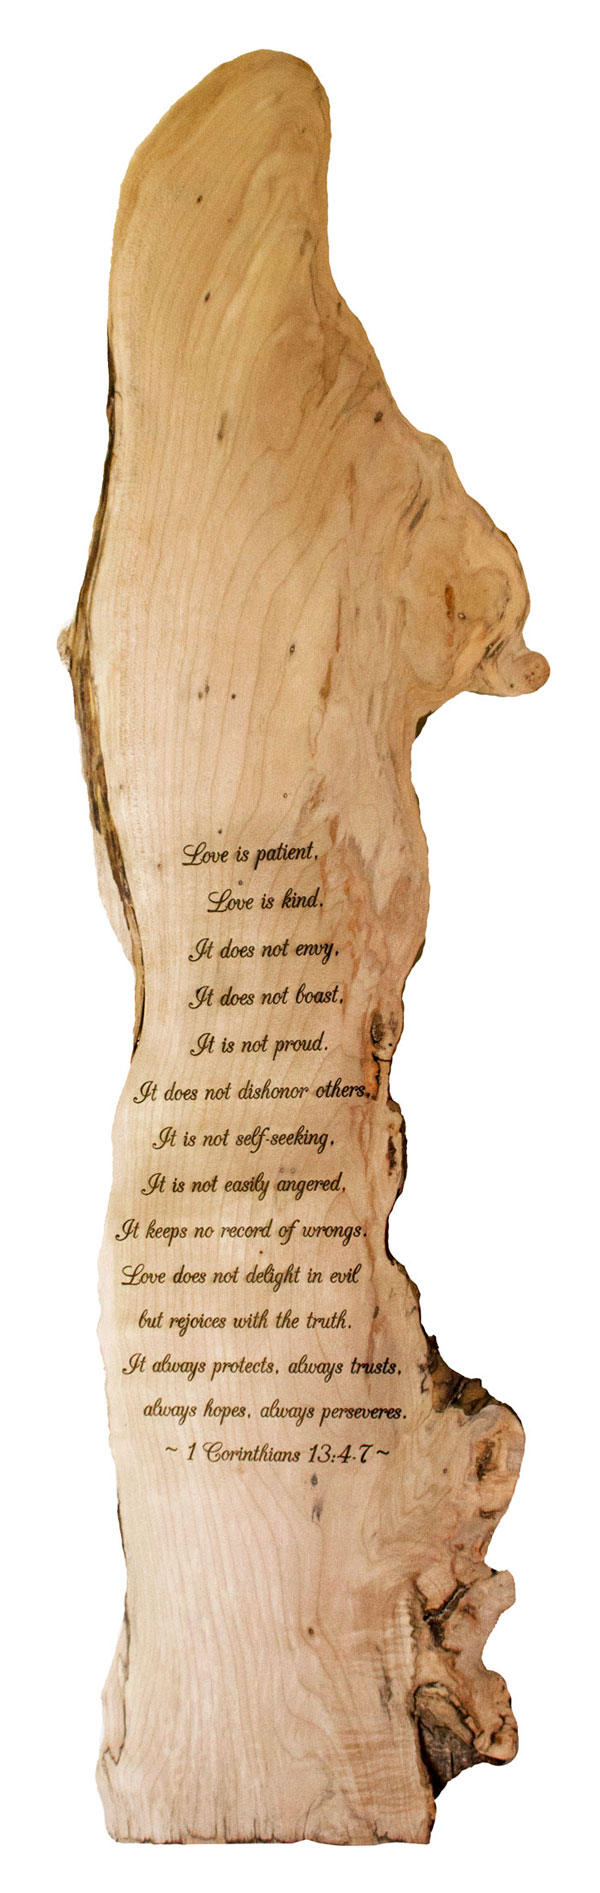 Wood engraving example